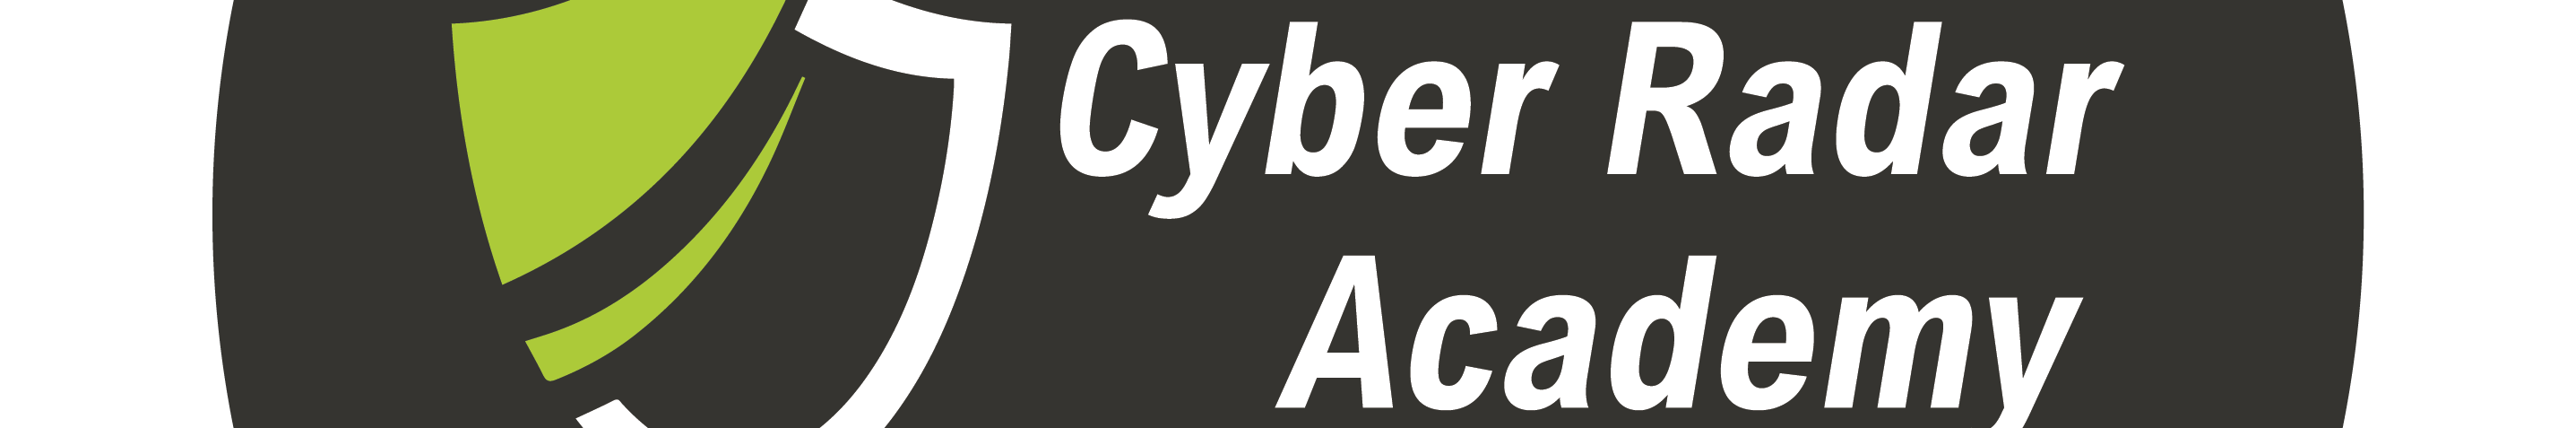 Cyber Radar Academy's profile banner